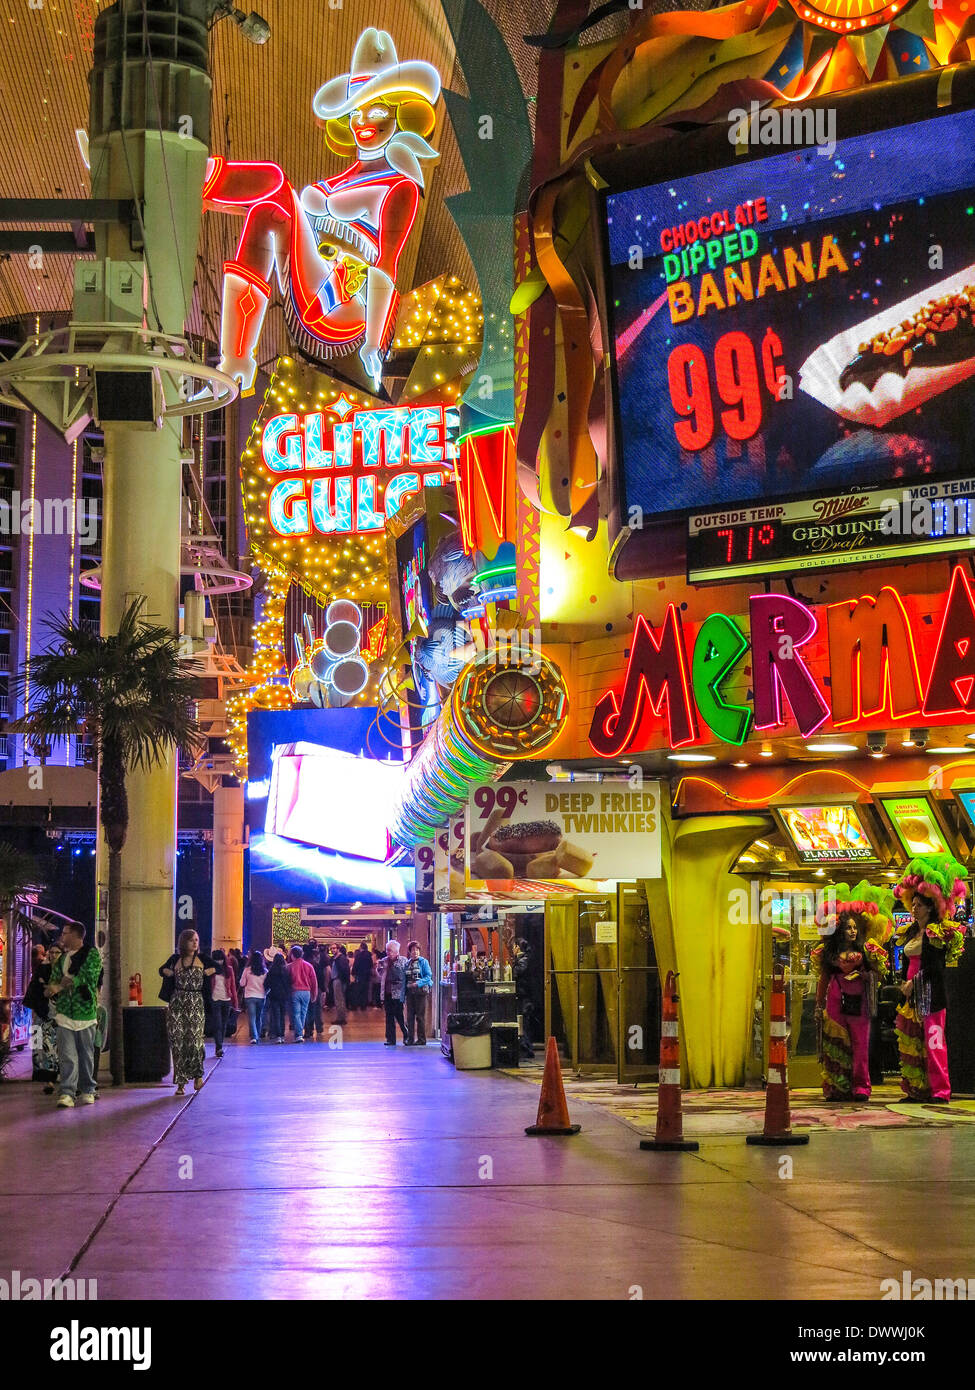 Vegas viejas fotografías e imágenes de alta resolución - Alamy